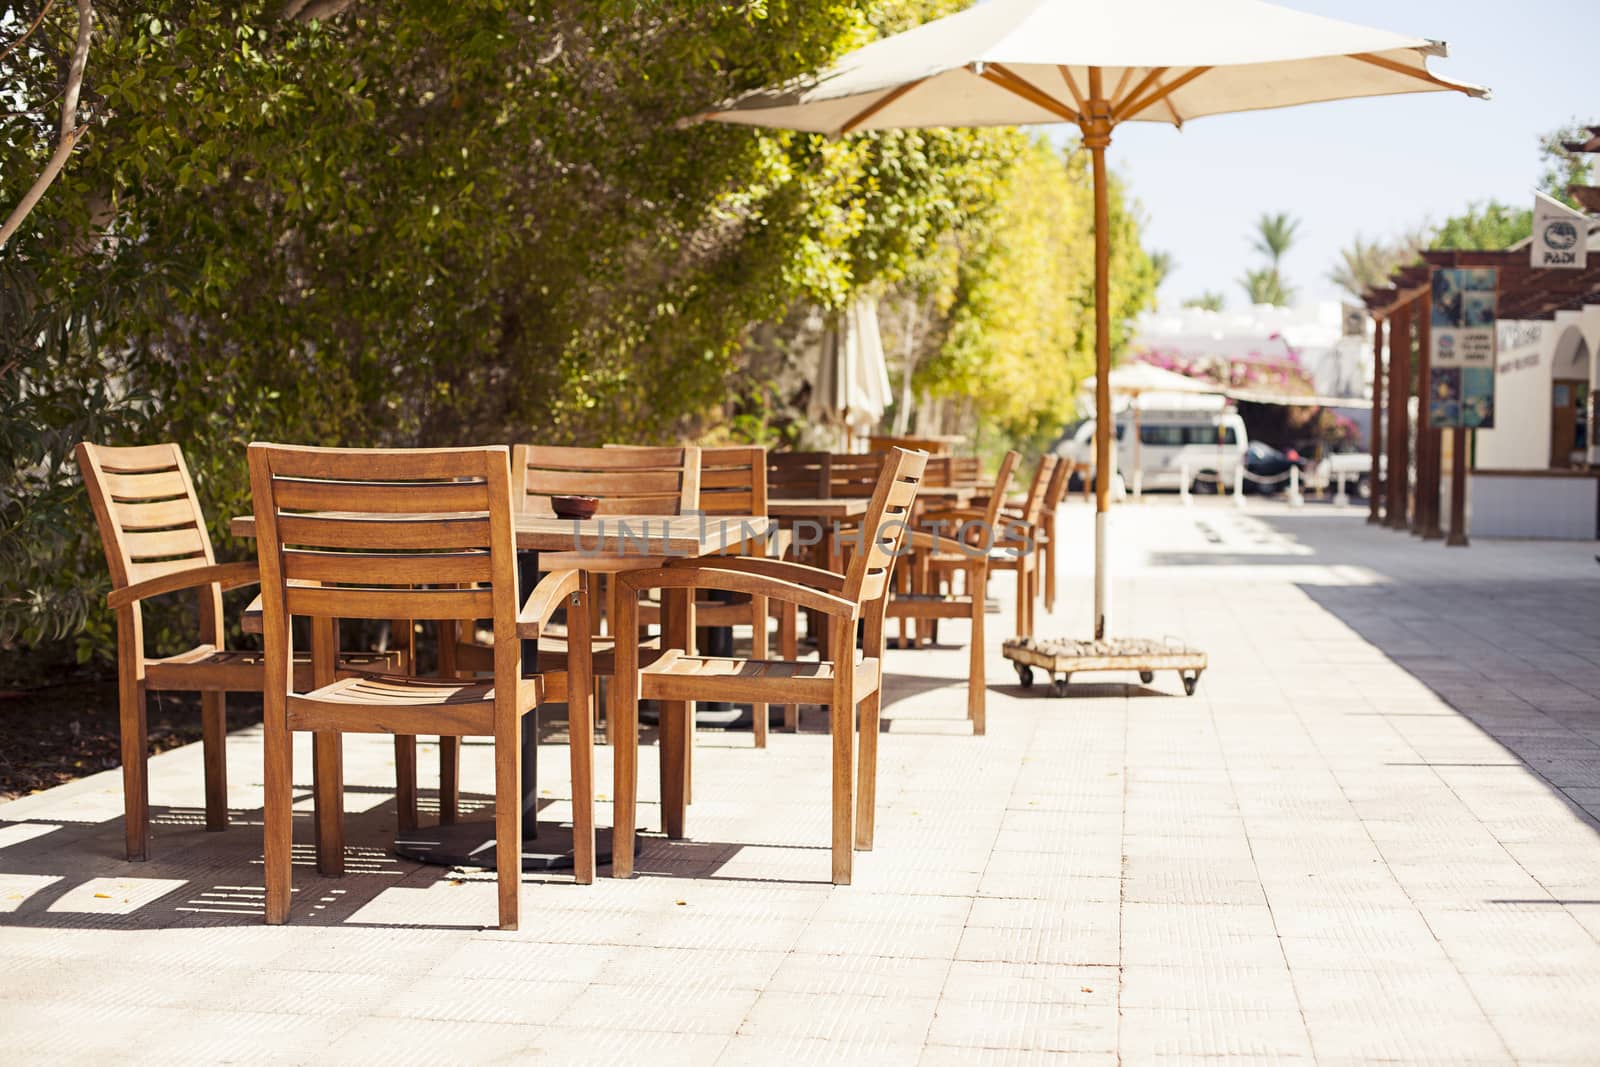 Sharm el sheikh, Egypt - 29 august: Outdoor Restaurant Coffee Open Air Cafe